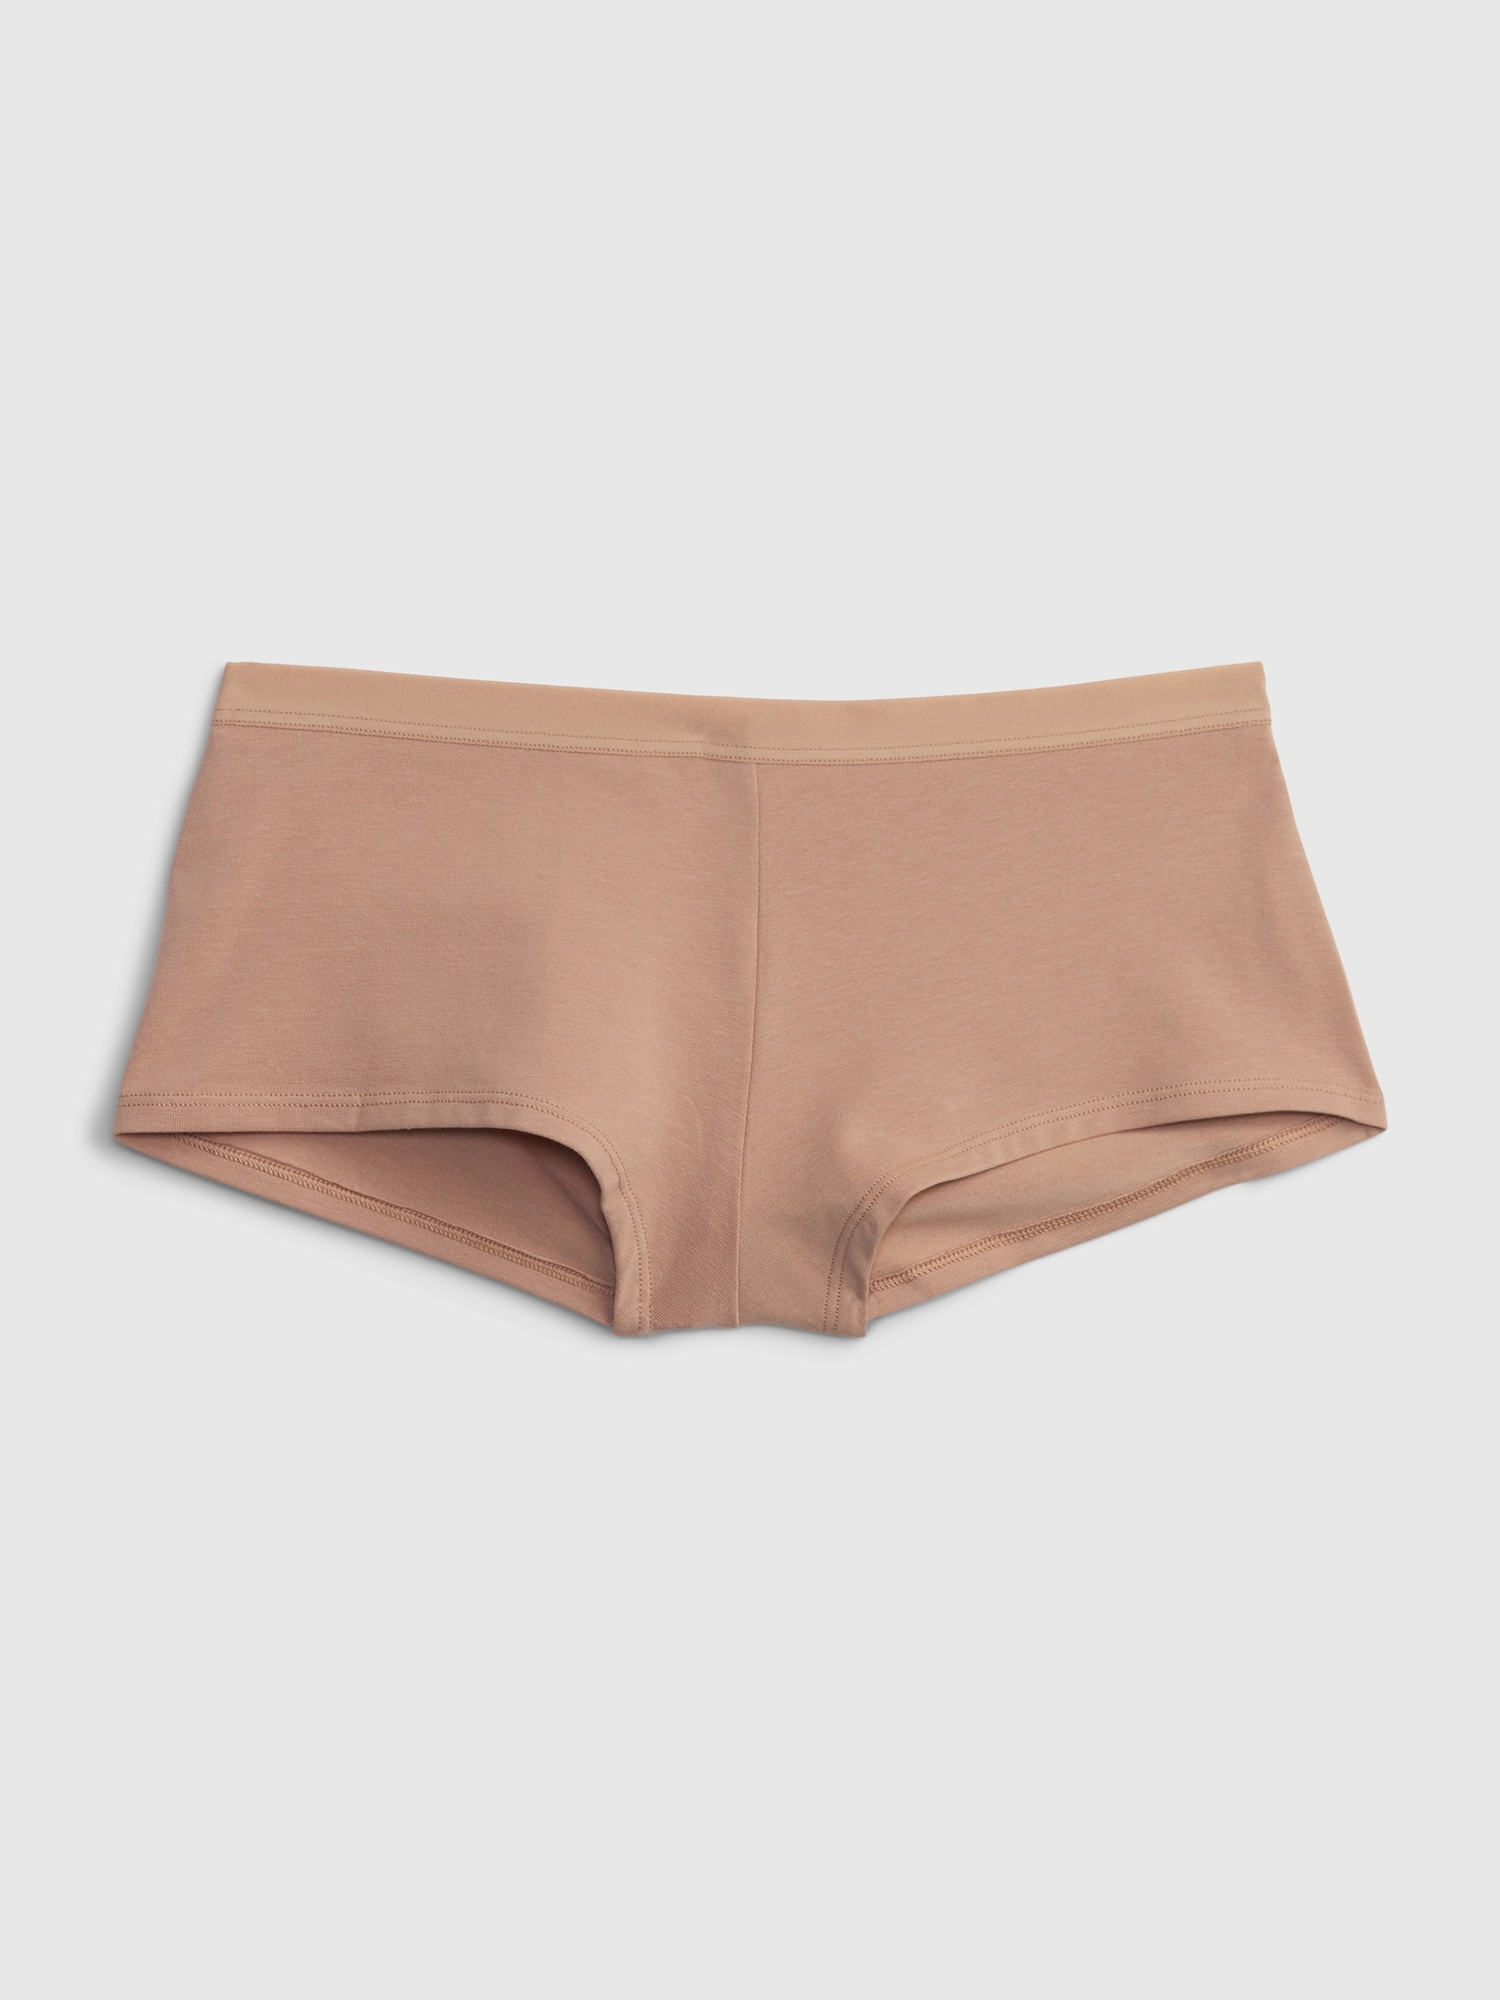 Elastic-free 100% organic linen boy shorts panty undies (Latex-Free) –  Rawganique